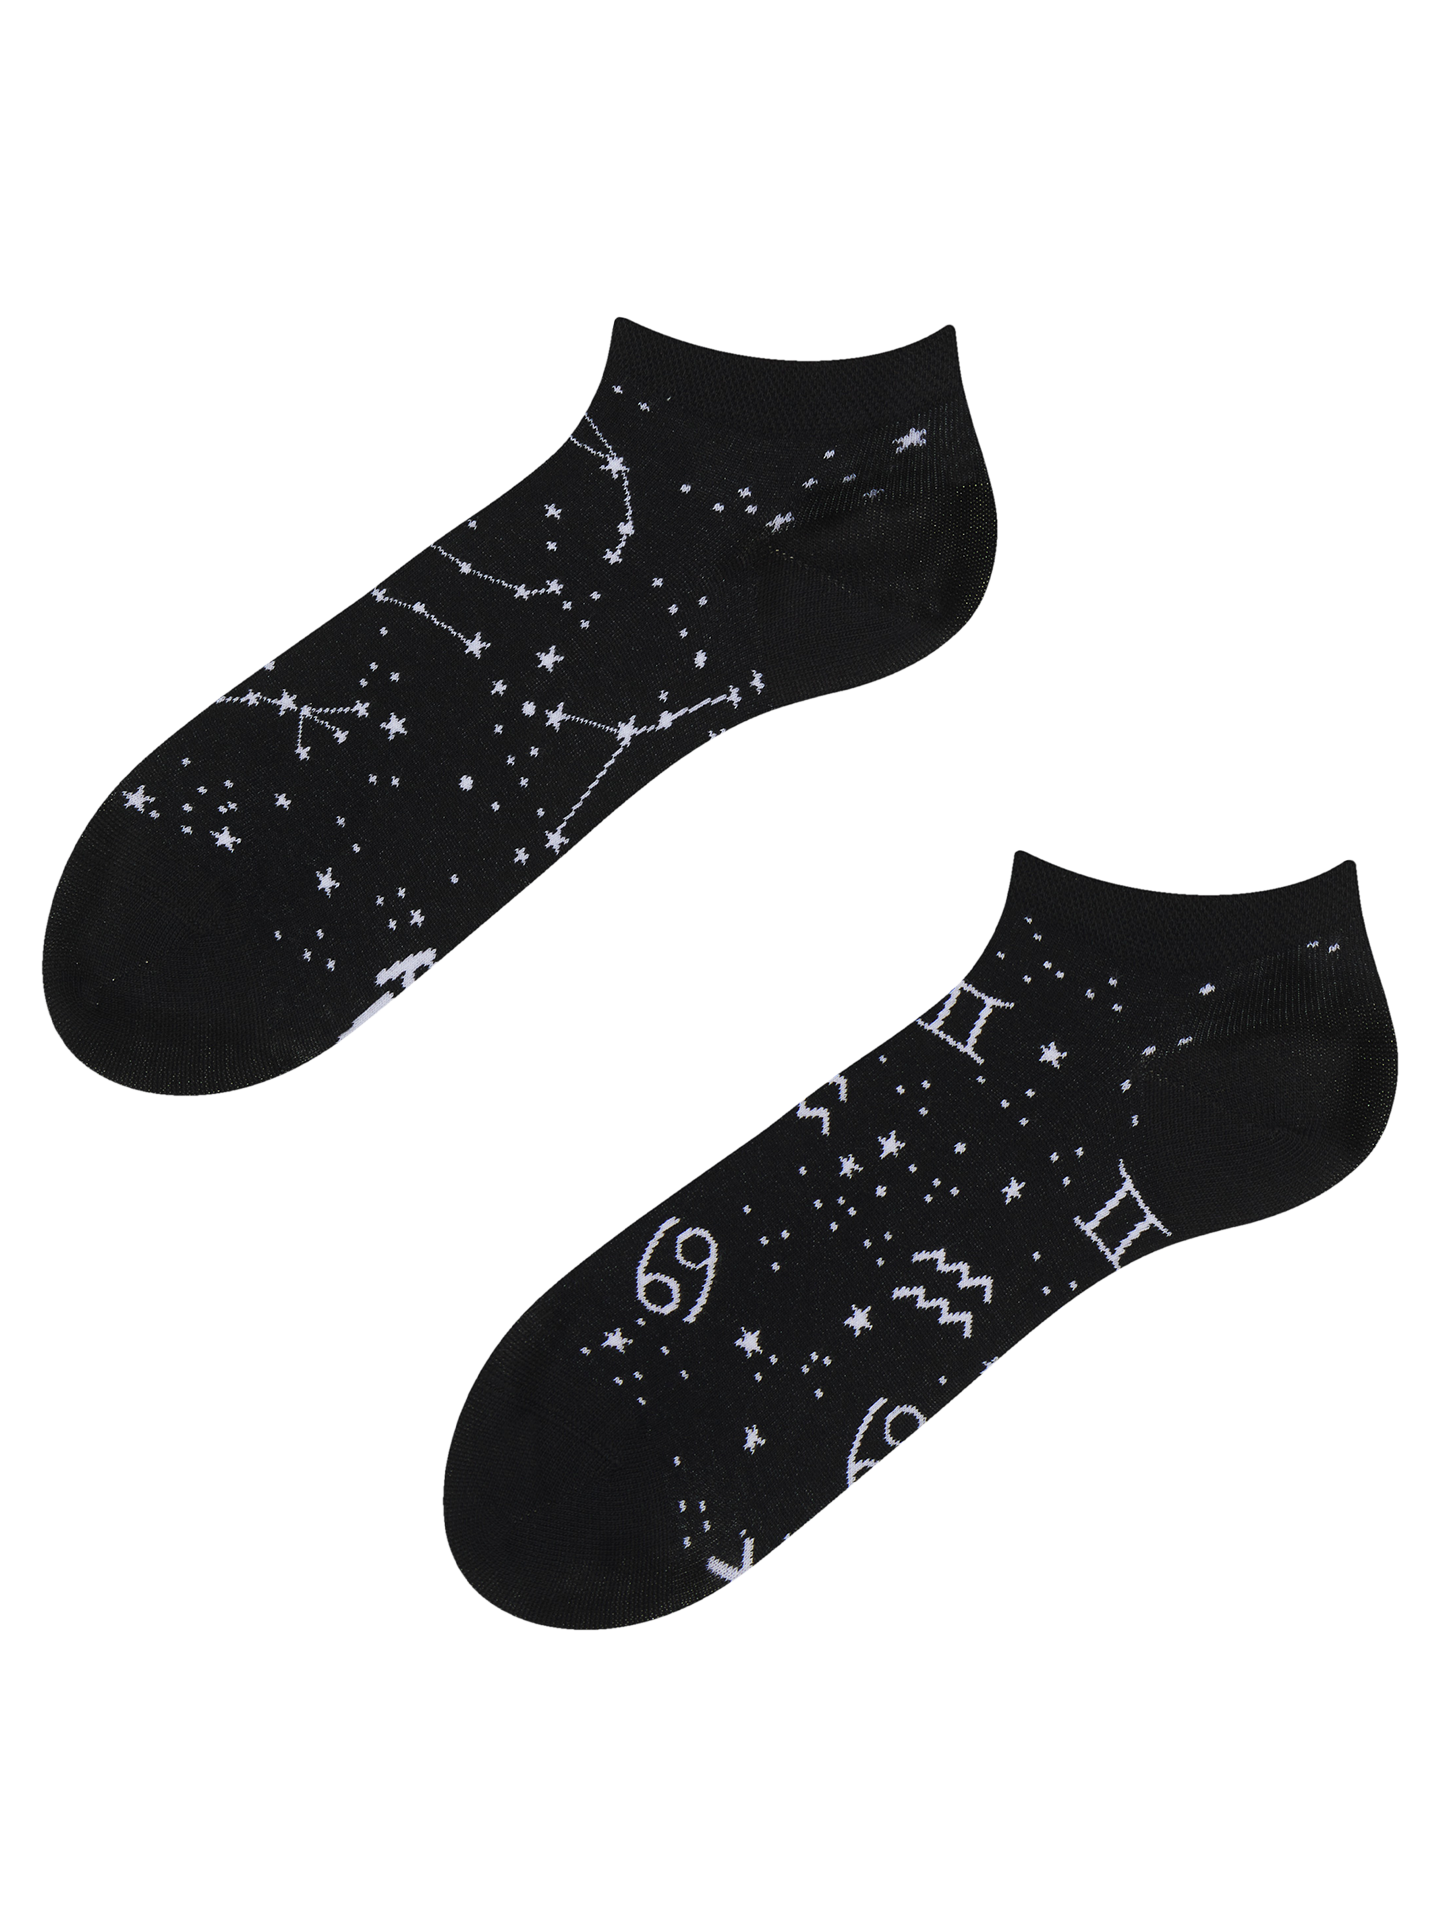 Ankle Socks Zodiac Signs